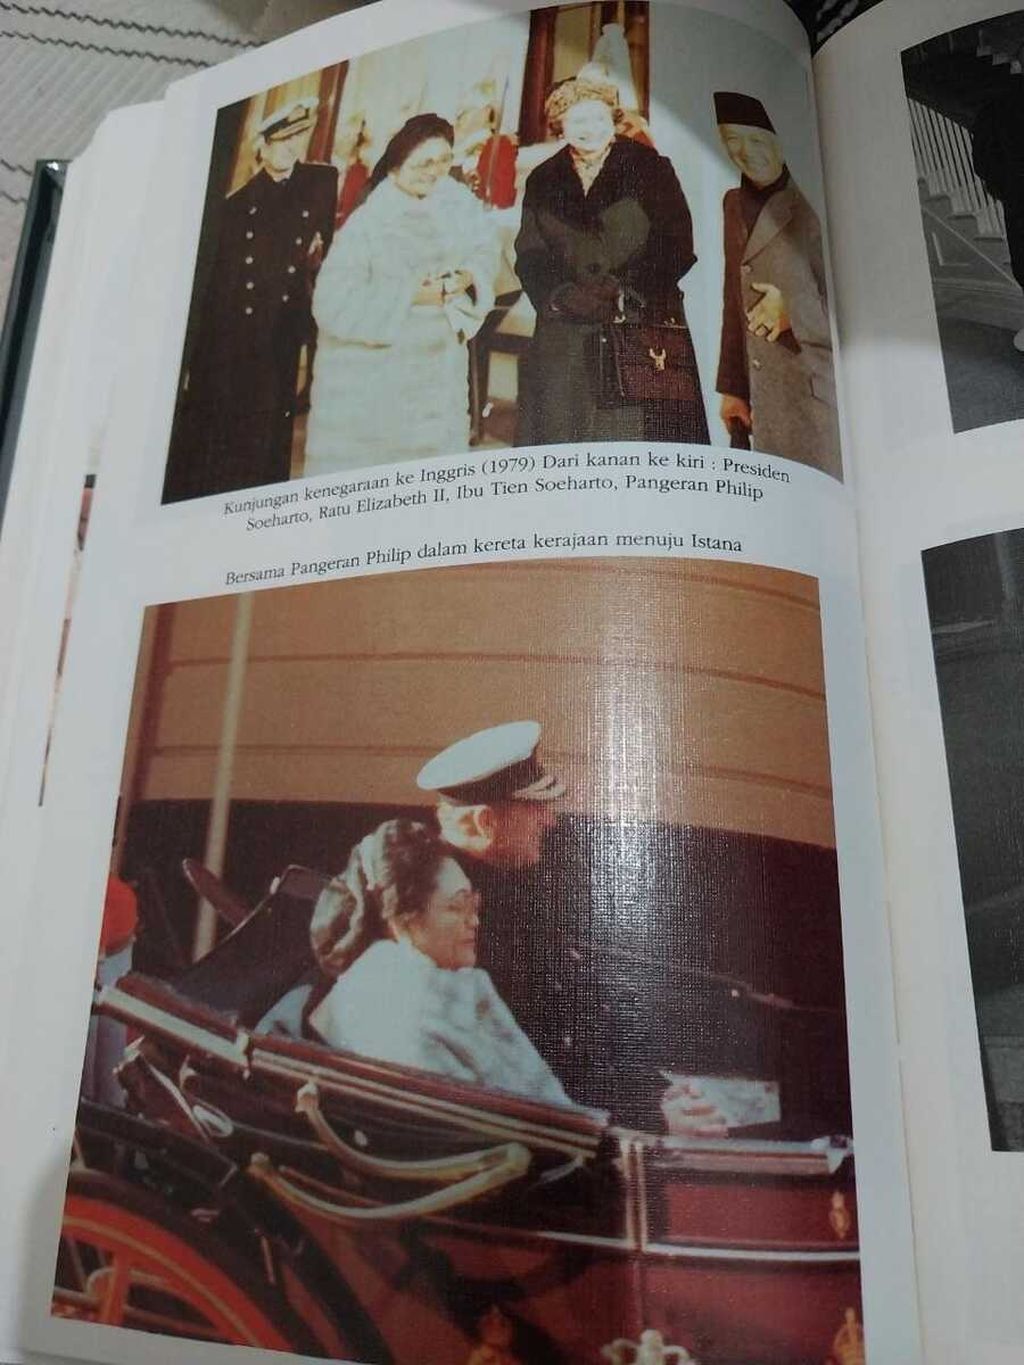 Foto-foto dalam buku berjudul "Siti Hartinah Soeharto, Ibu Utama Indonesia" yang mengabadikan kunjungan Presiden Soeharto saat bertemu Ratu Elizabeth II di Inggris.